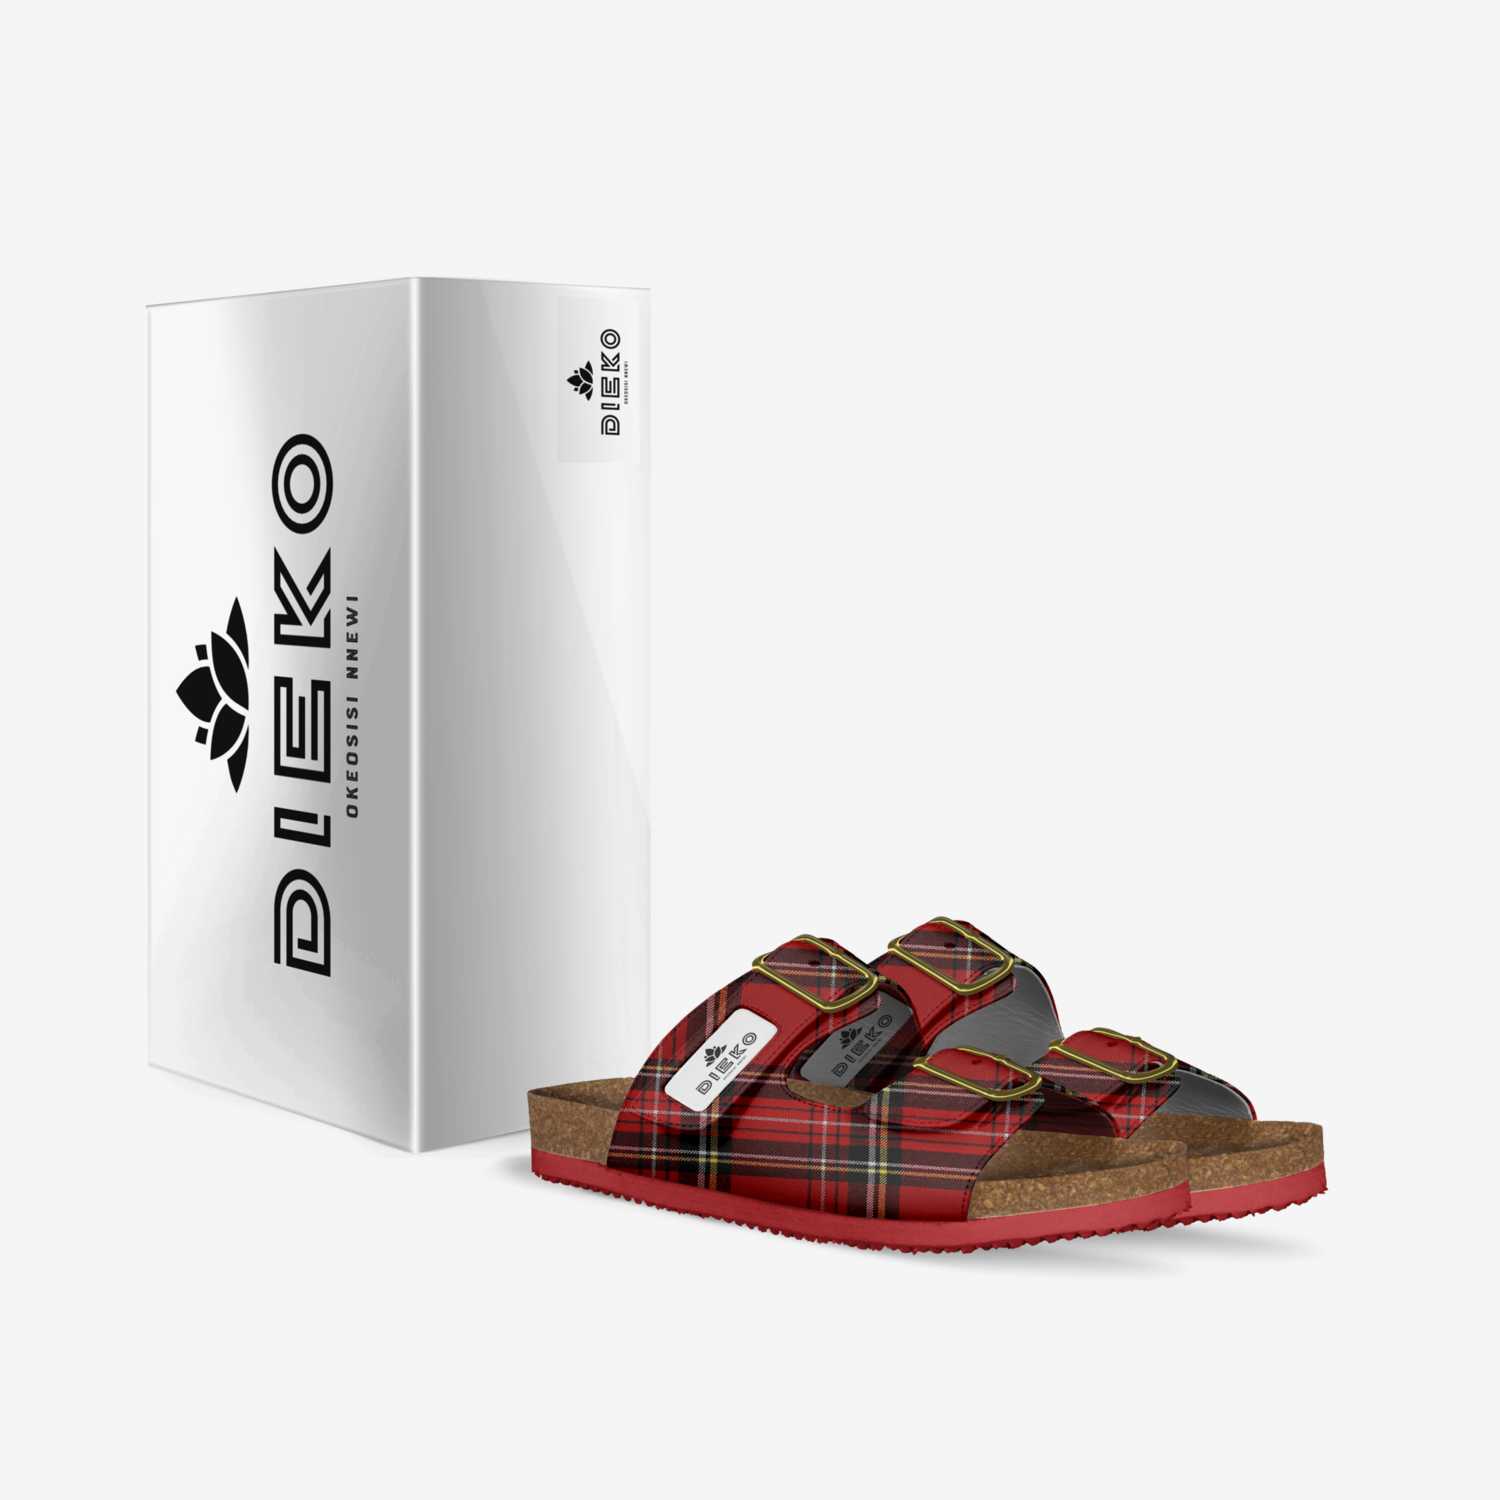 Diẹ̀kọ́ custom made in Italy shoes by Obi Ifediora | Box view